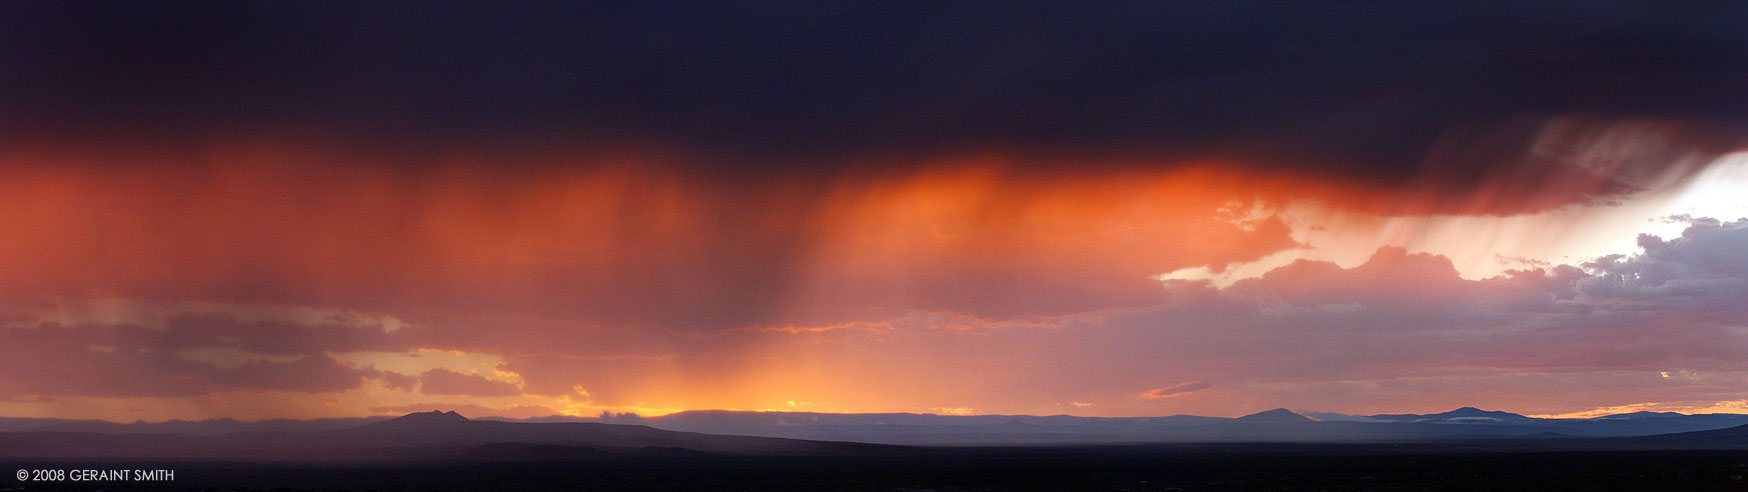 A Taos sunset across the mesa throught the rain